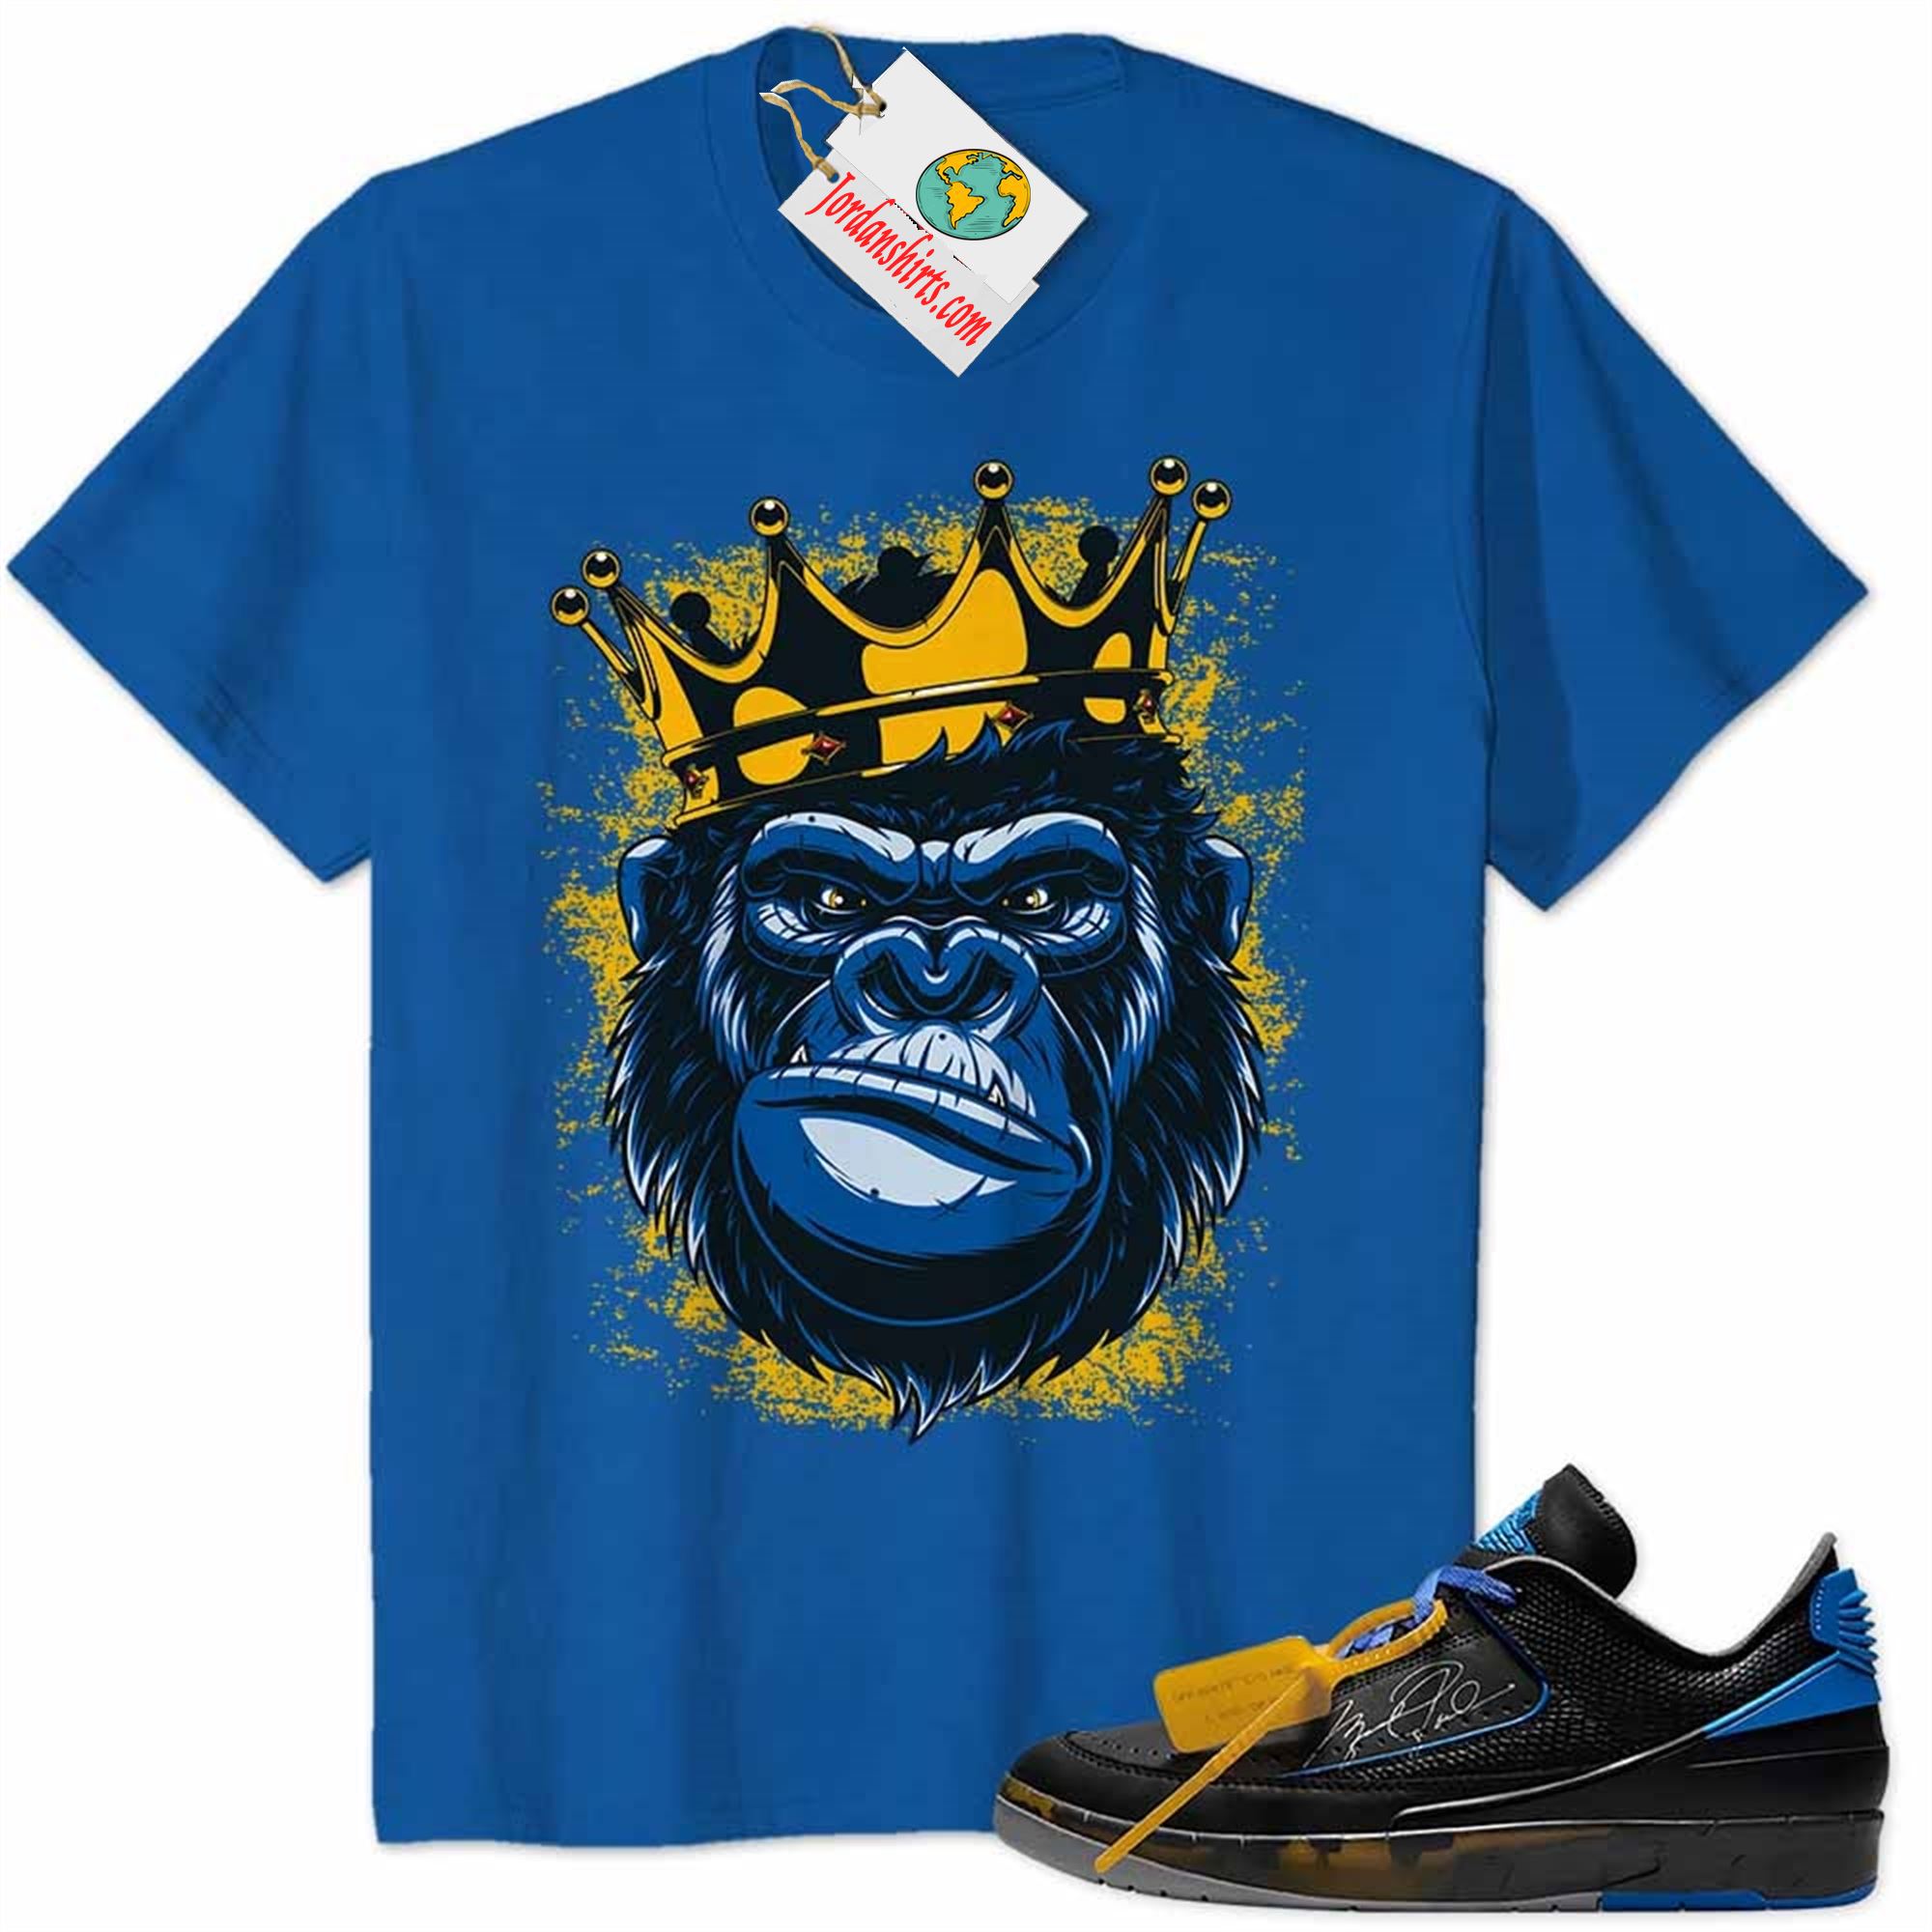 Jordan 2 Shirt, The Gorilla King With Crown Blue Air Jordan 2 Low X Off-white Black And Varsity Royal 2s Plus Size Up To 5xl